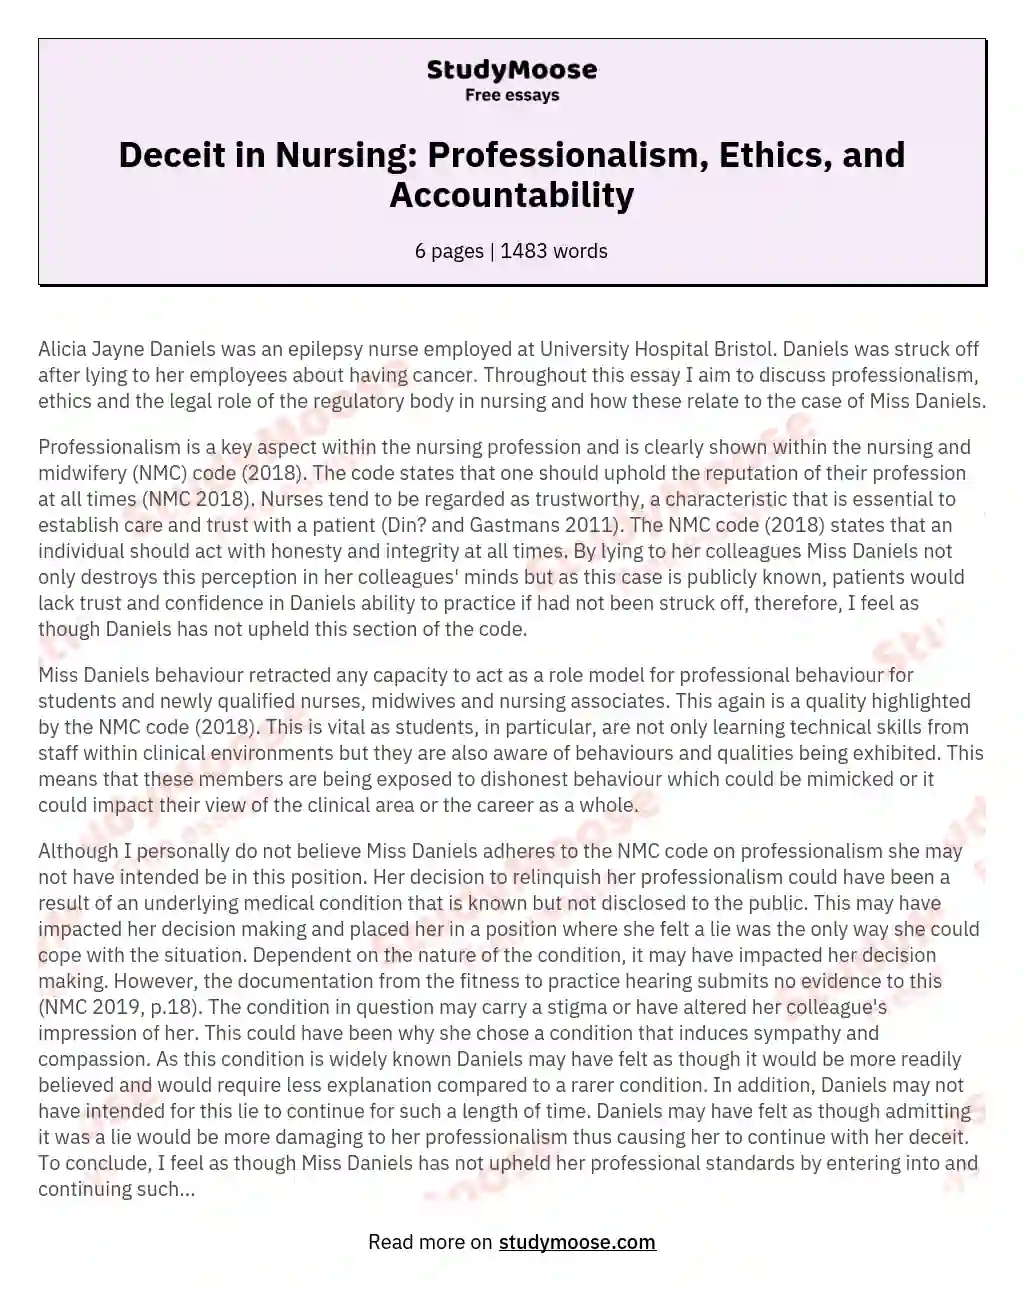 Deceit in Nursing: Professionalism, Ethics, and Accountability essay